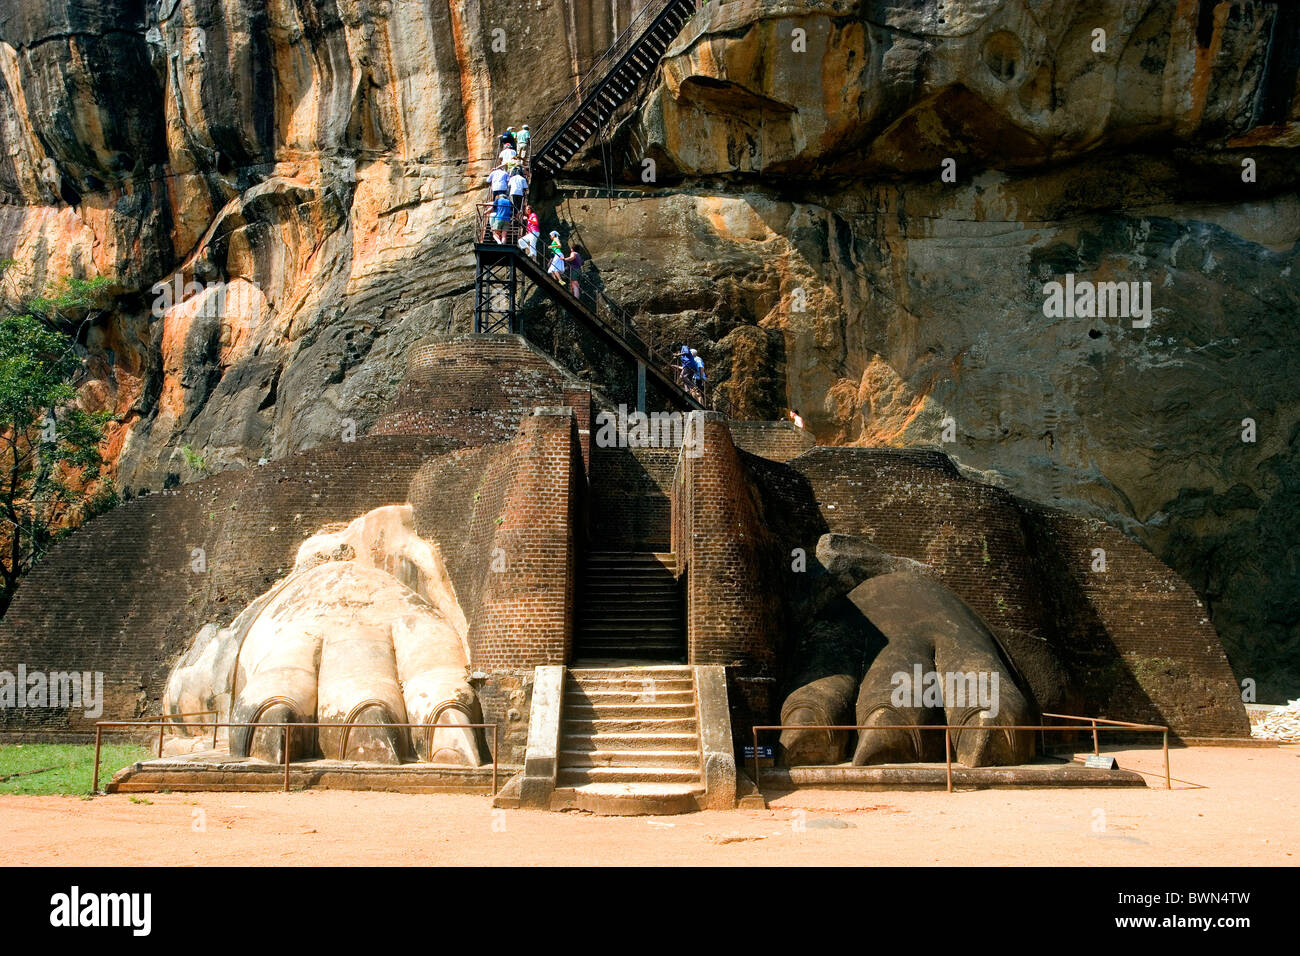 Sri Lanka Asien Sigiriya Stadt antiken Städte UNESCO Welt Kulturerbe Website Festung historische Kultur Rockgeschichte Stockfoto